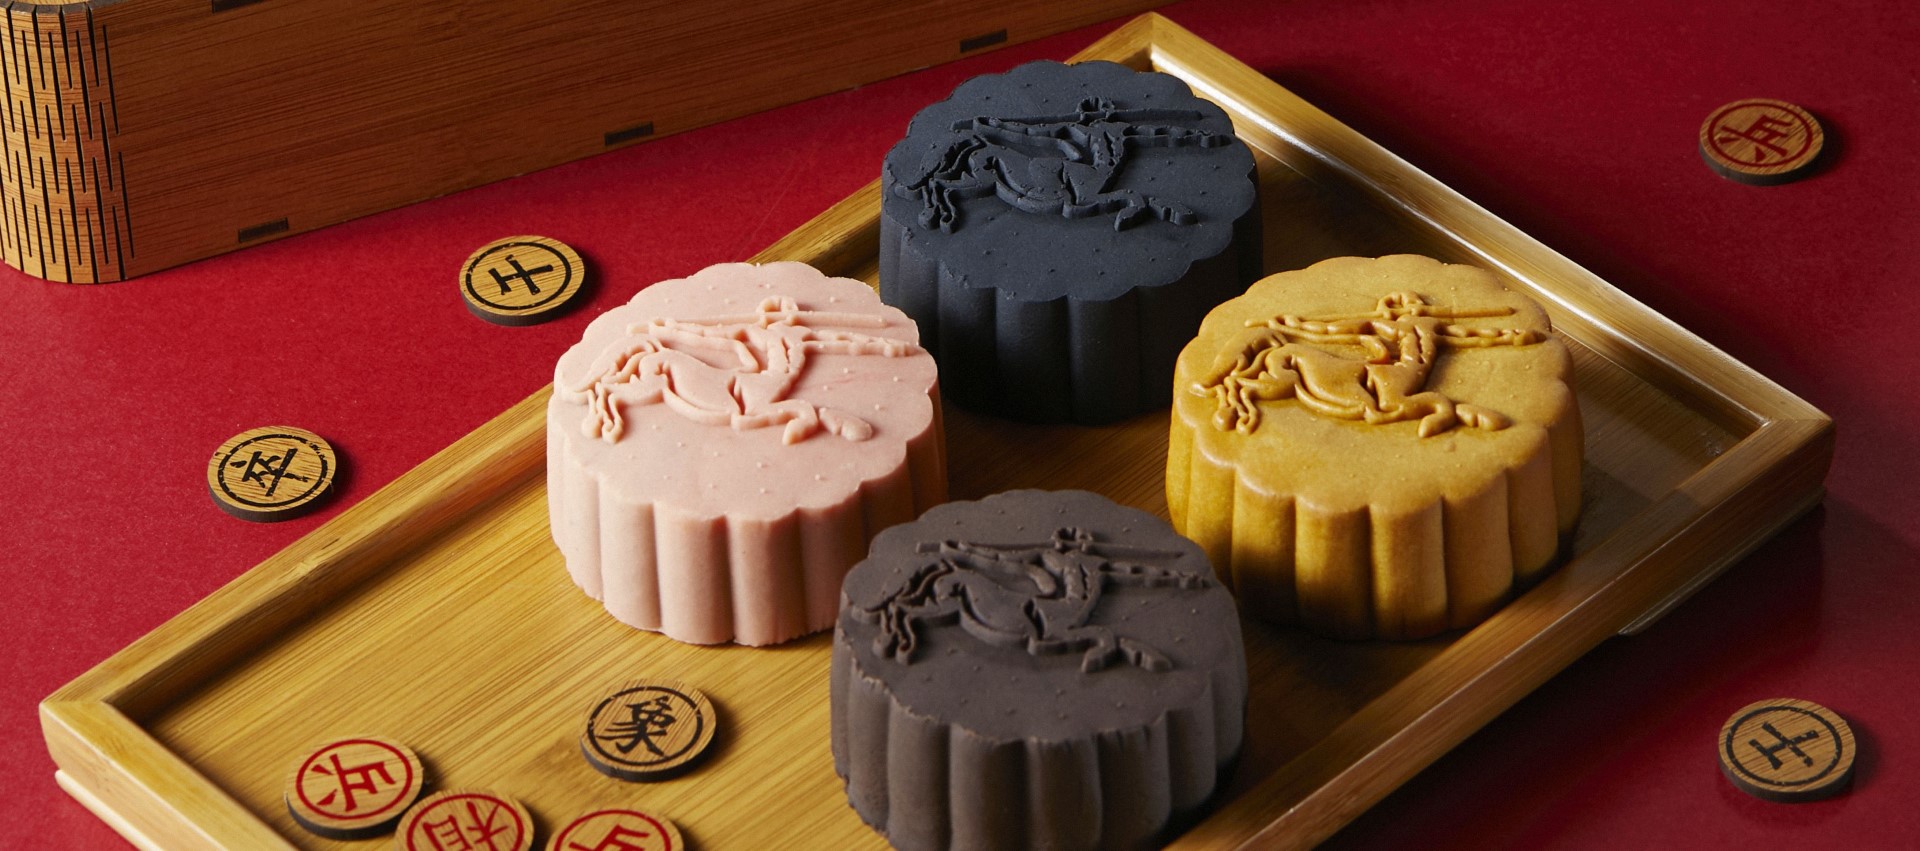 Rémy Cointreau Celebrates the Mid-Autumn Festival with a Limited Edition Mooncake Gift Set